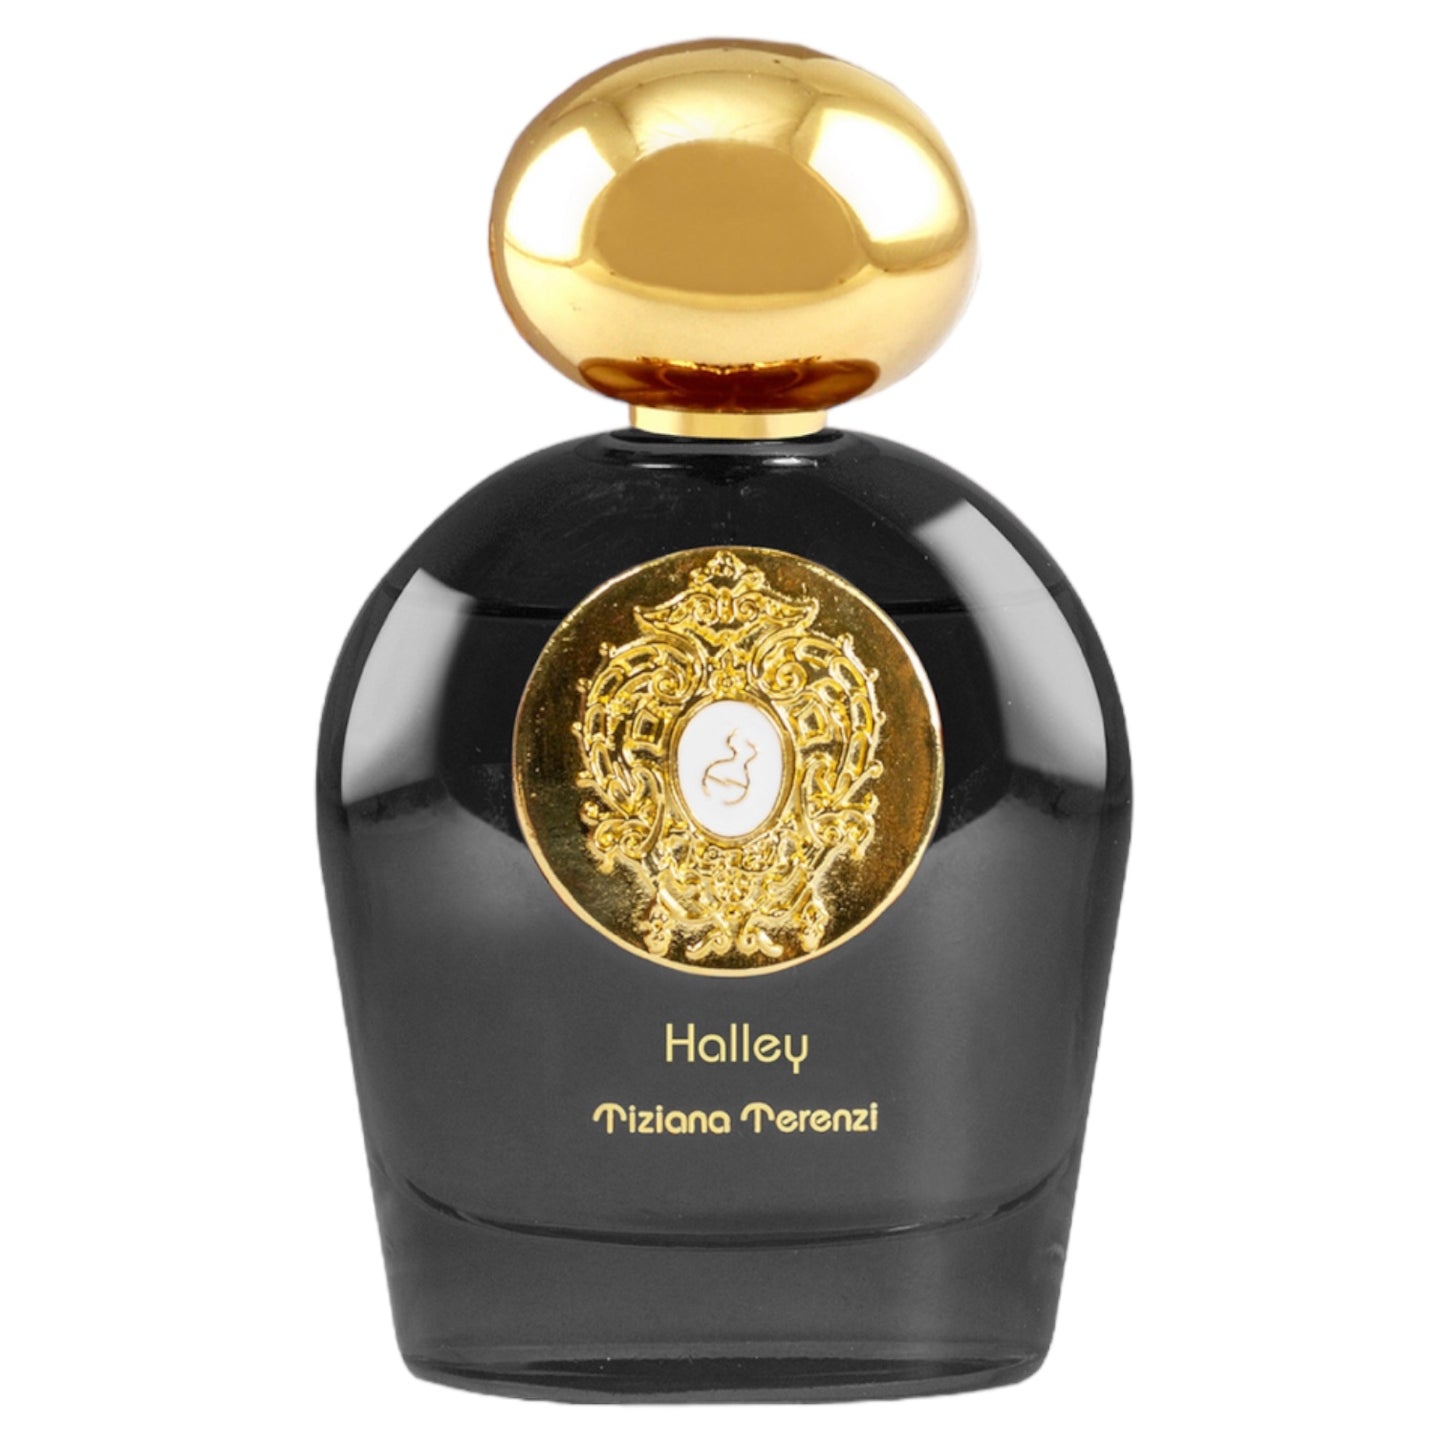 Tiziana Terenzi Halley Extrait de Parfum